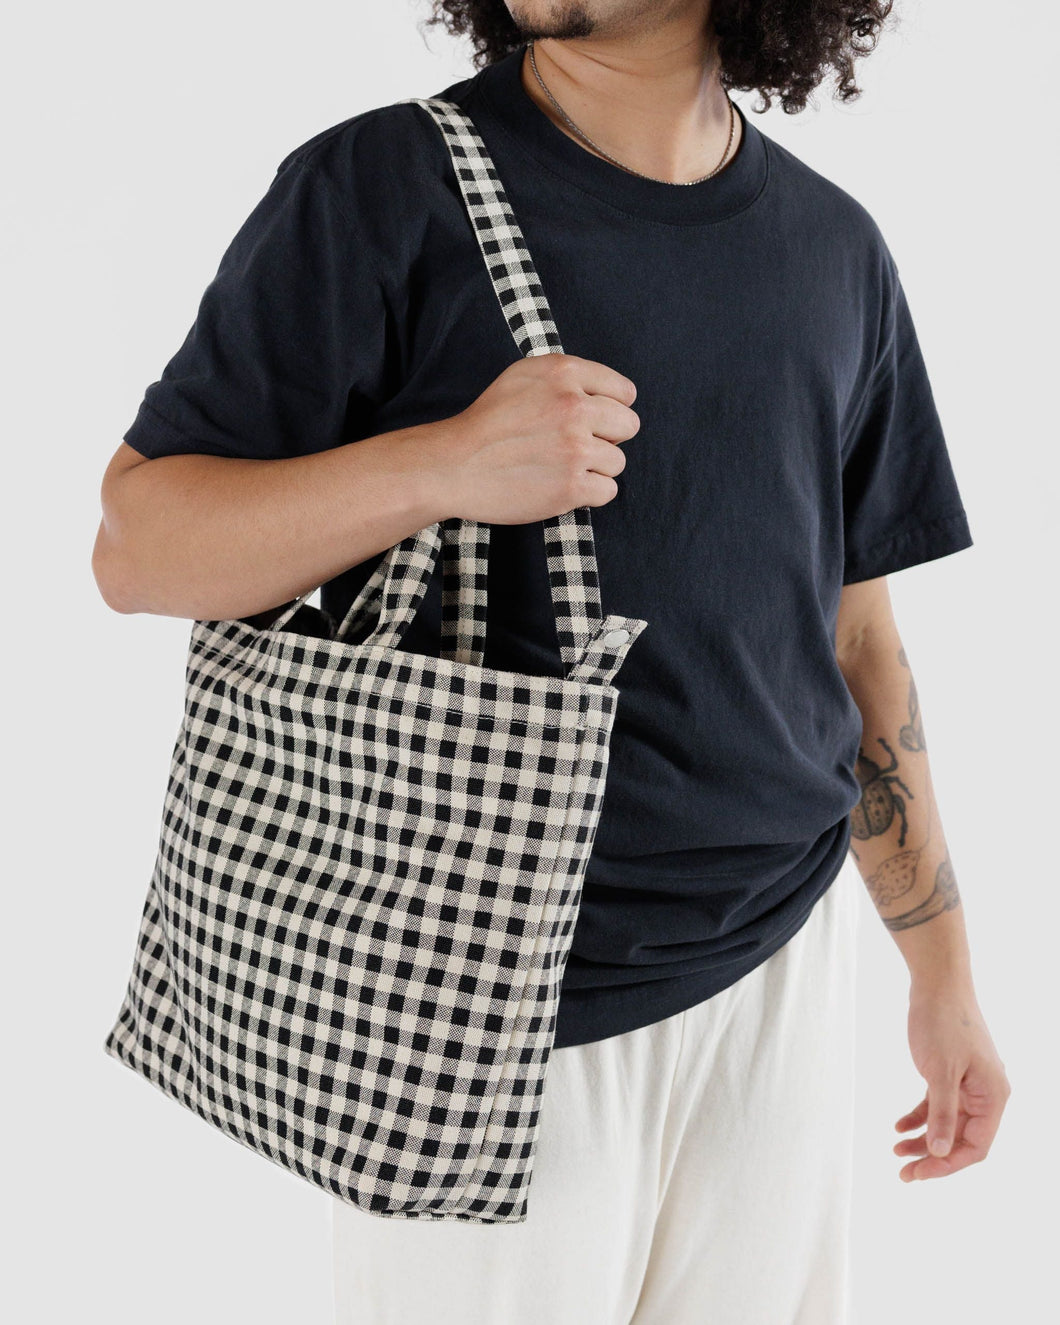 baggu - horizontal  zip duck bag - black & white gingham